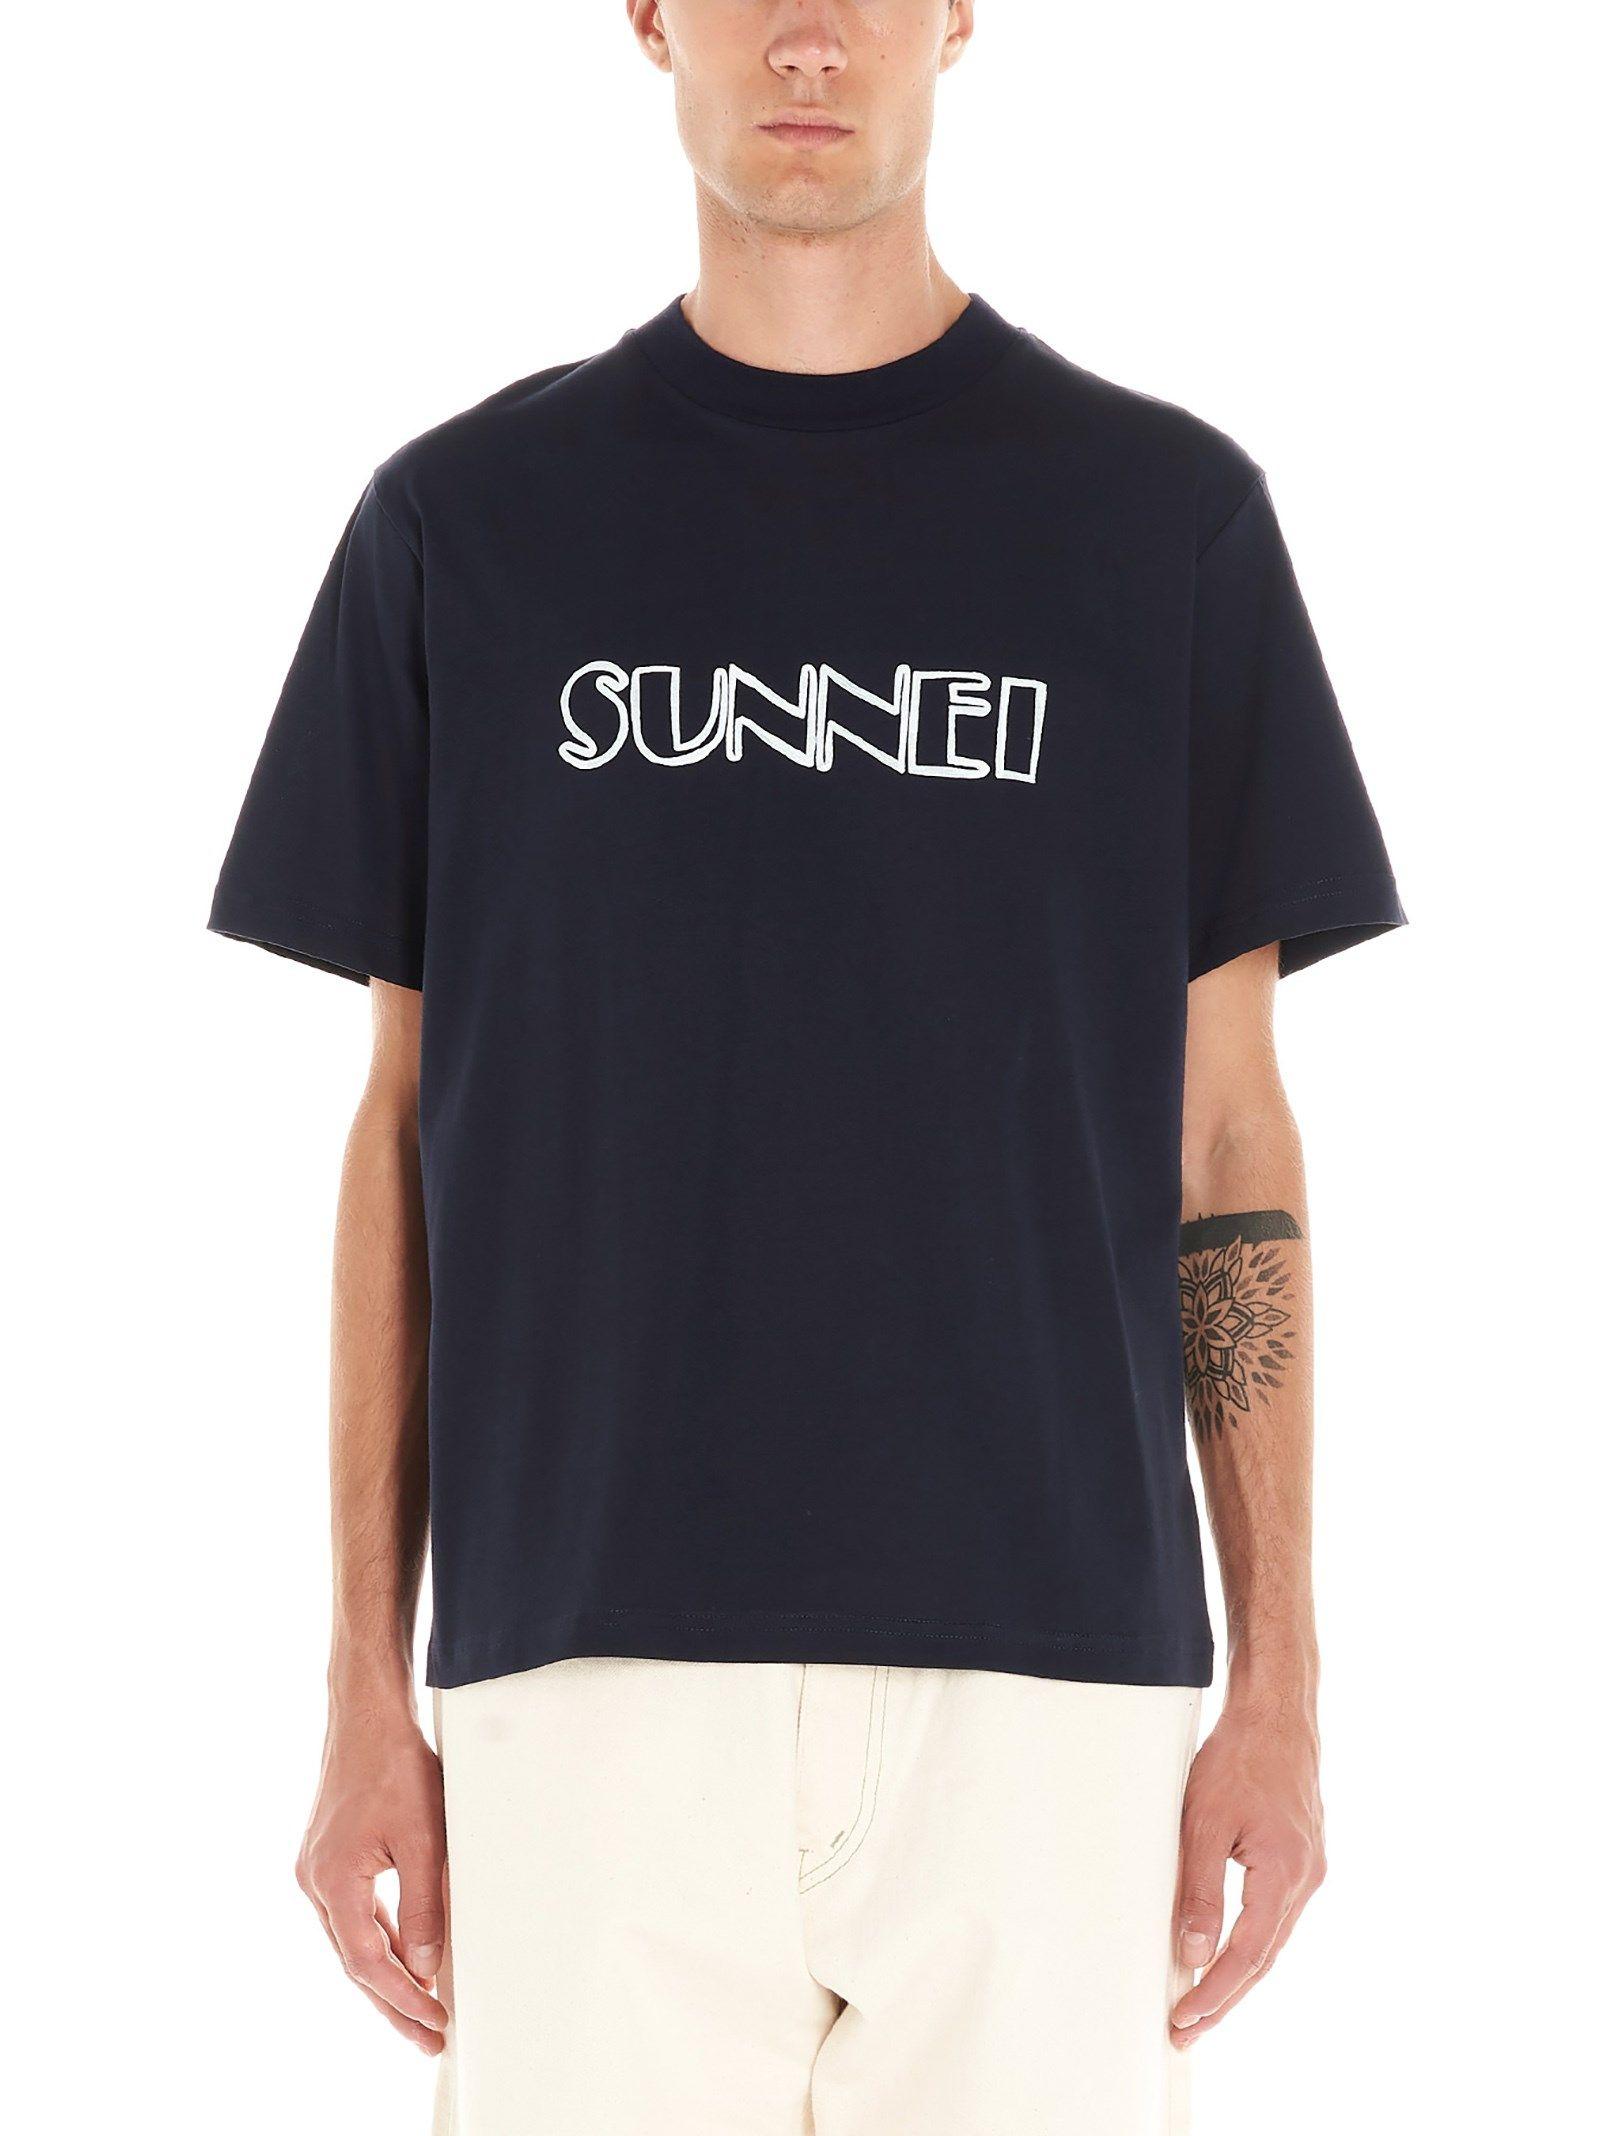 Sunnei Cotton Marker Logo T-shirt in Blue for Men - Save 39% - Lyst